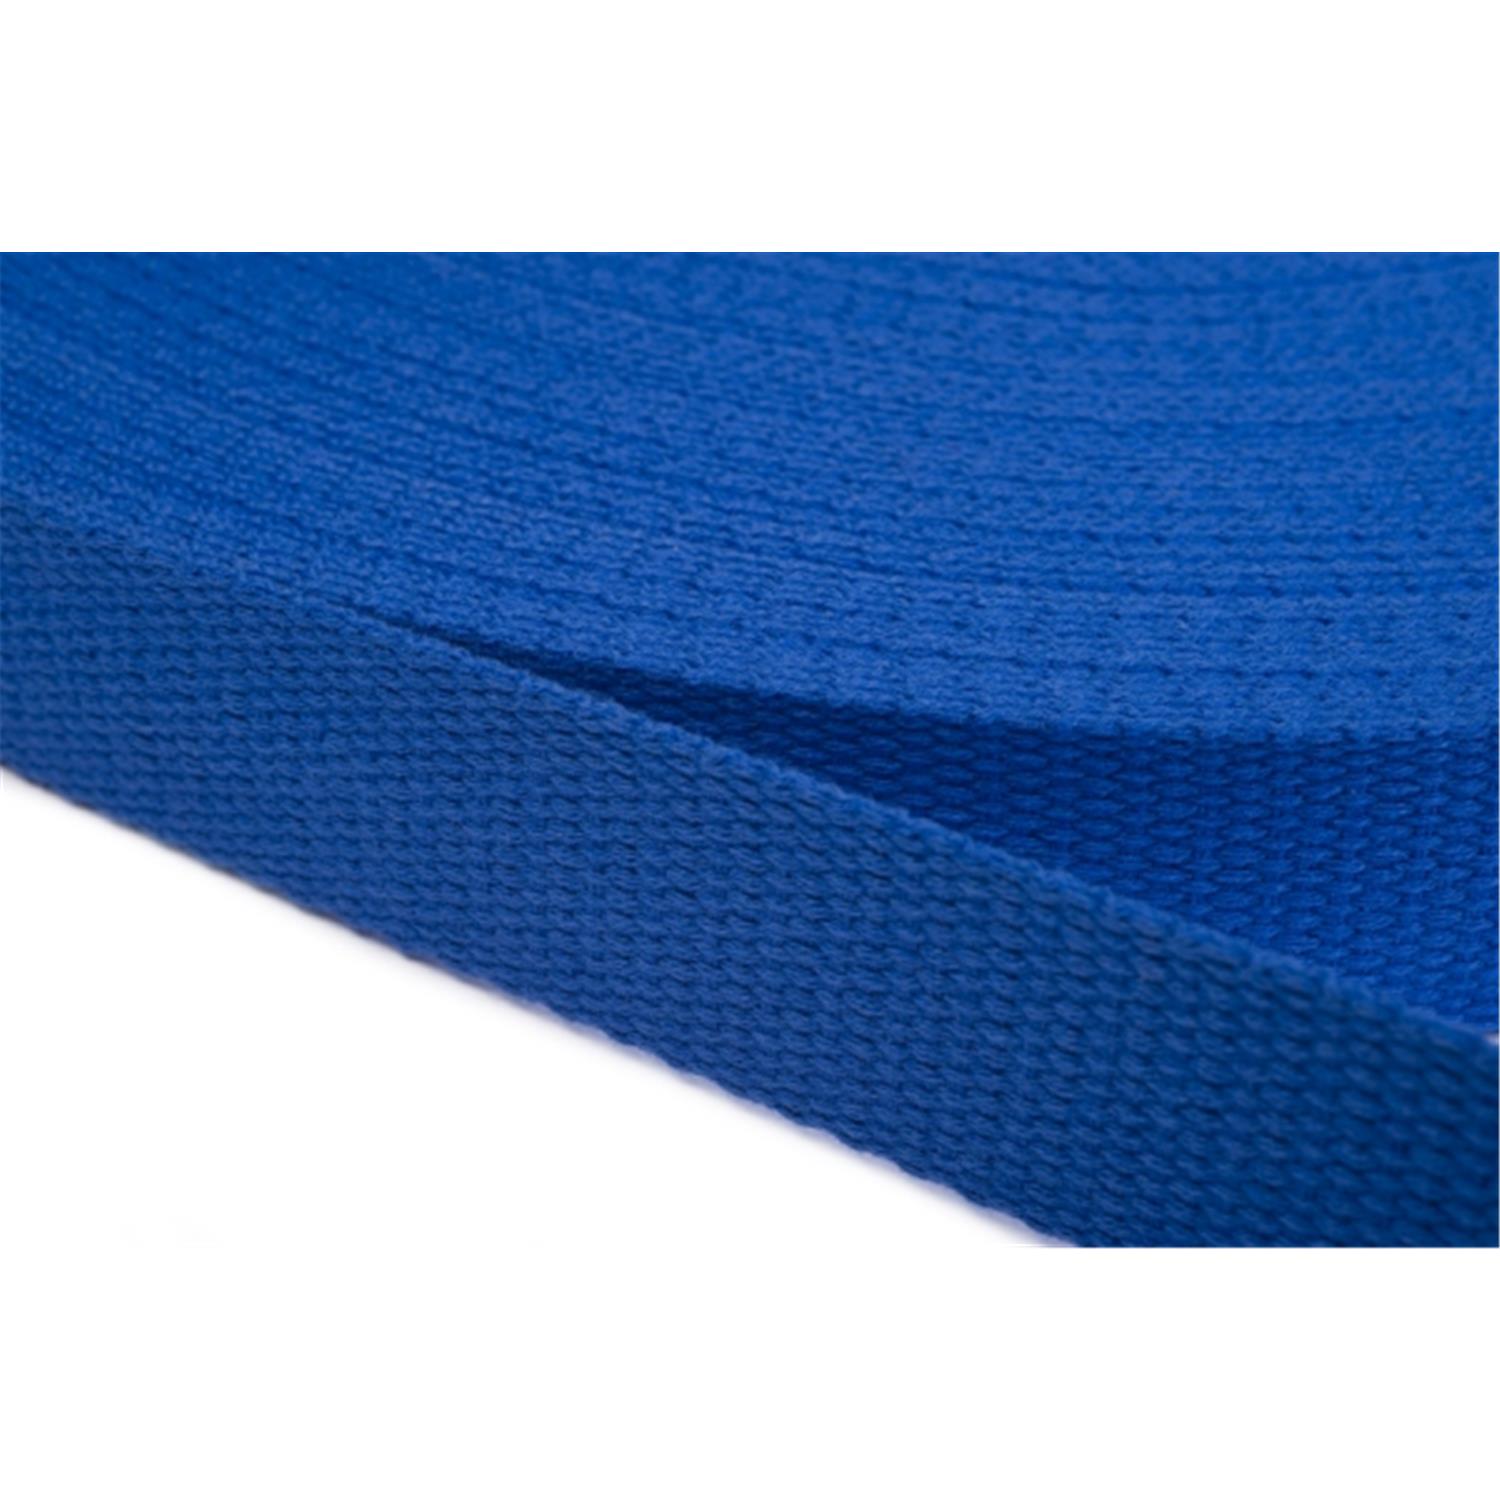 Gurtband aus Baumwolle 20mm in 20 Farben 12 - royalblau 12 Meter